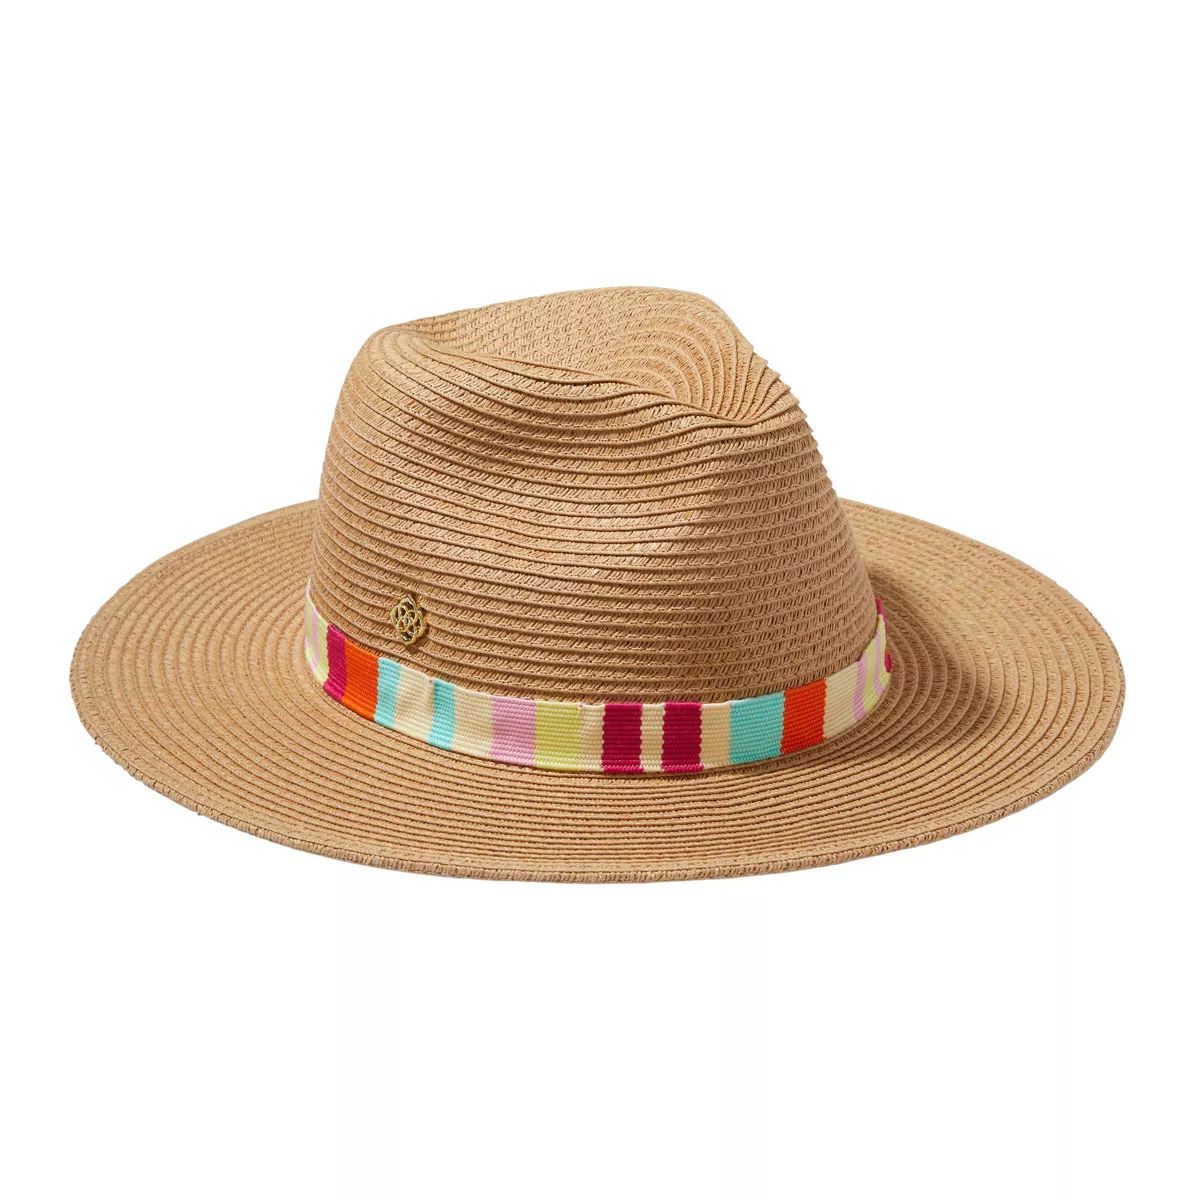 Kendra Scott Pasleigh Panama Woven Band Hat - Tan | Target